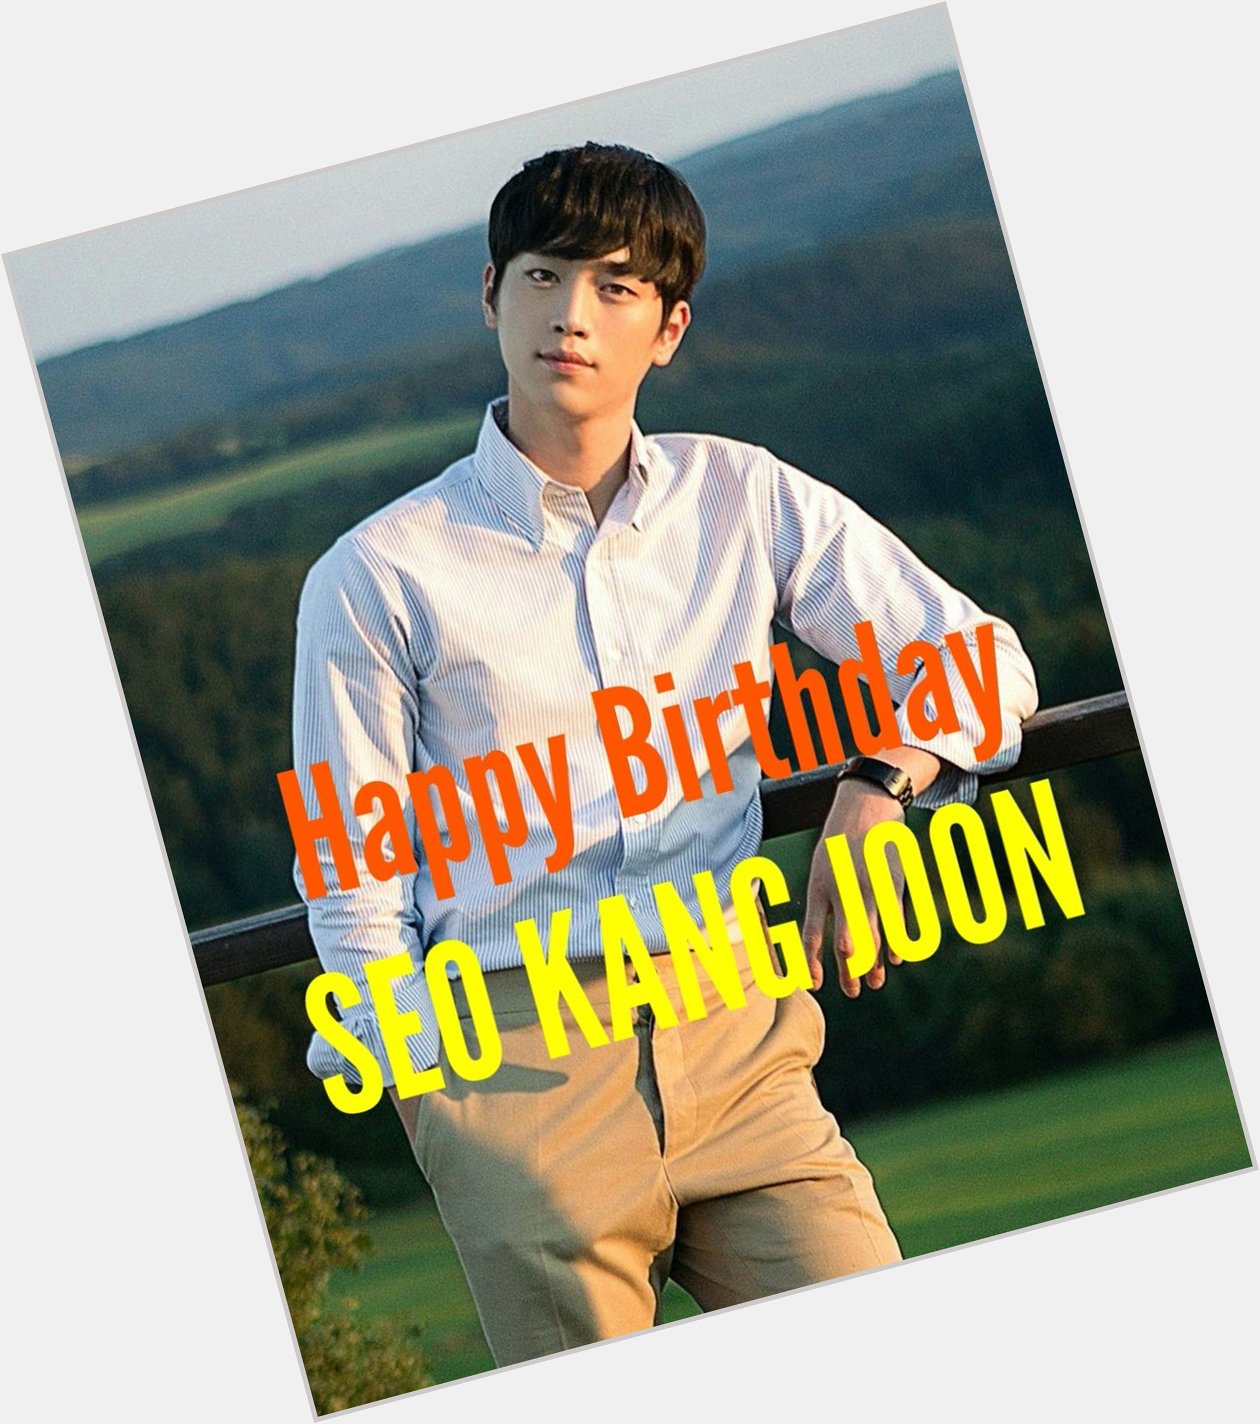 Happy Birthday SEO KANG JOON!      